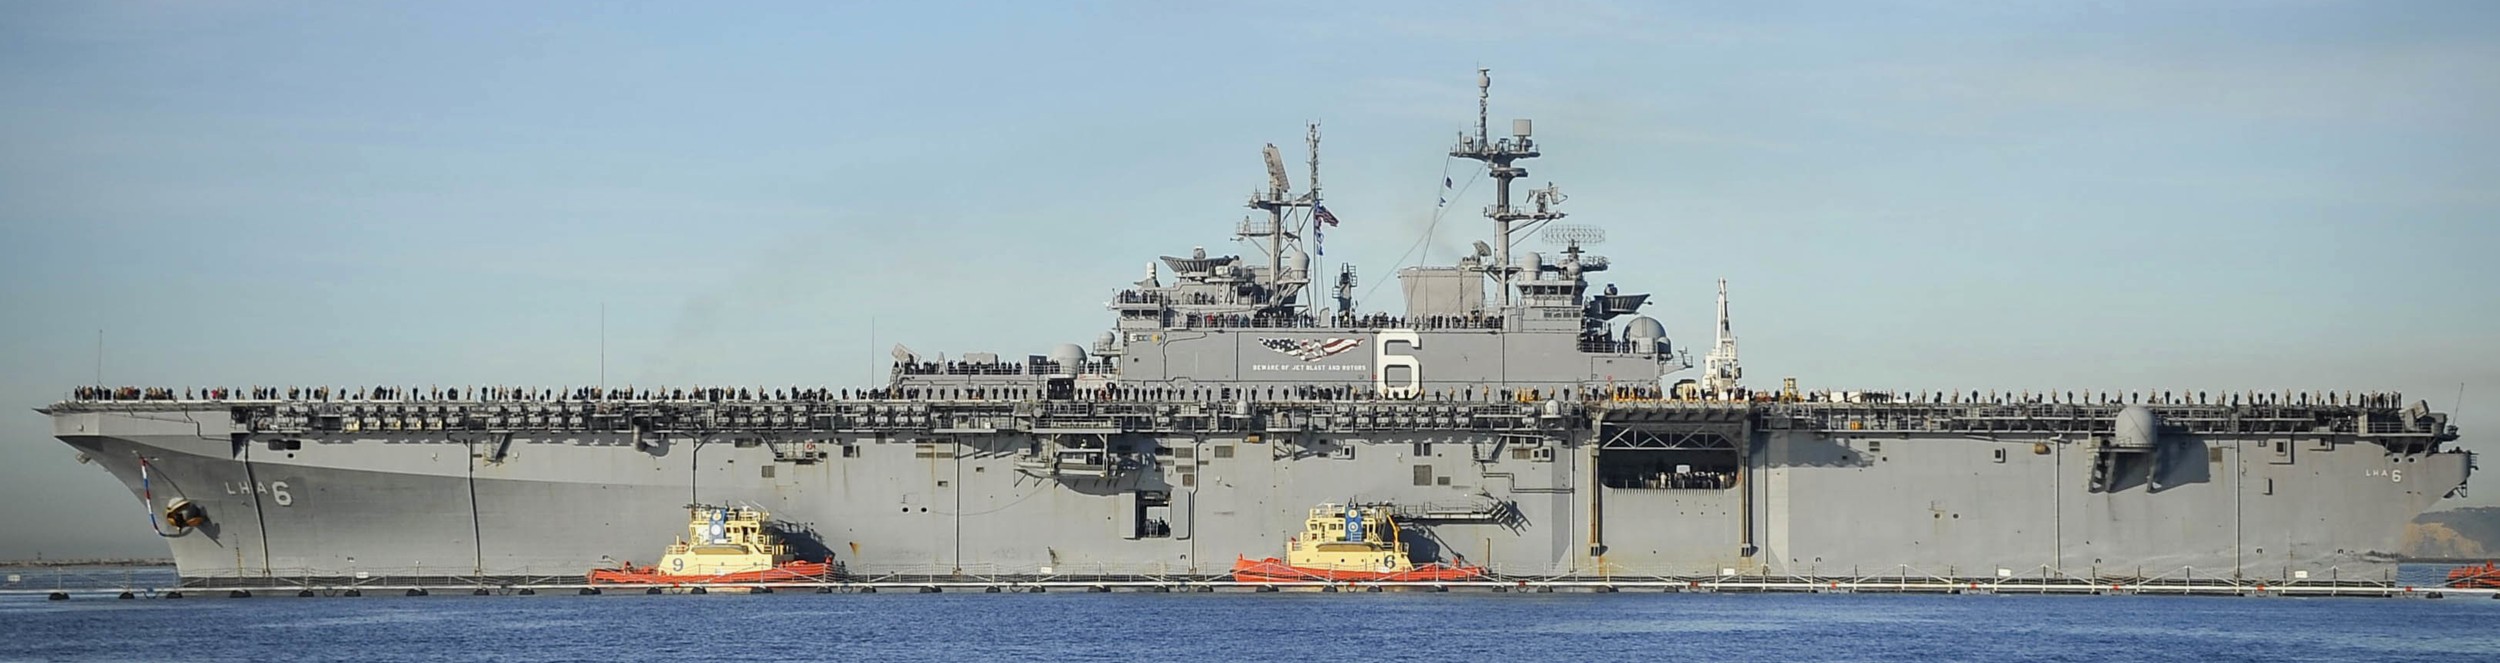 lha-6 uss america amphibious assault ship landing us navy returning san diego 103